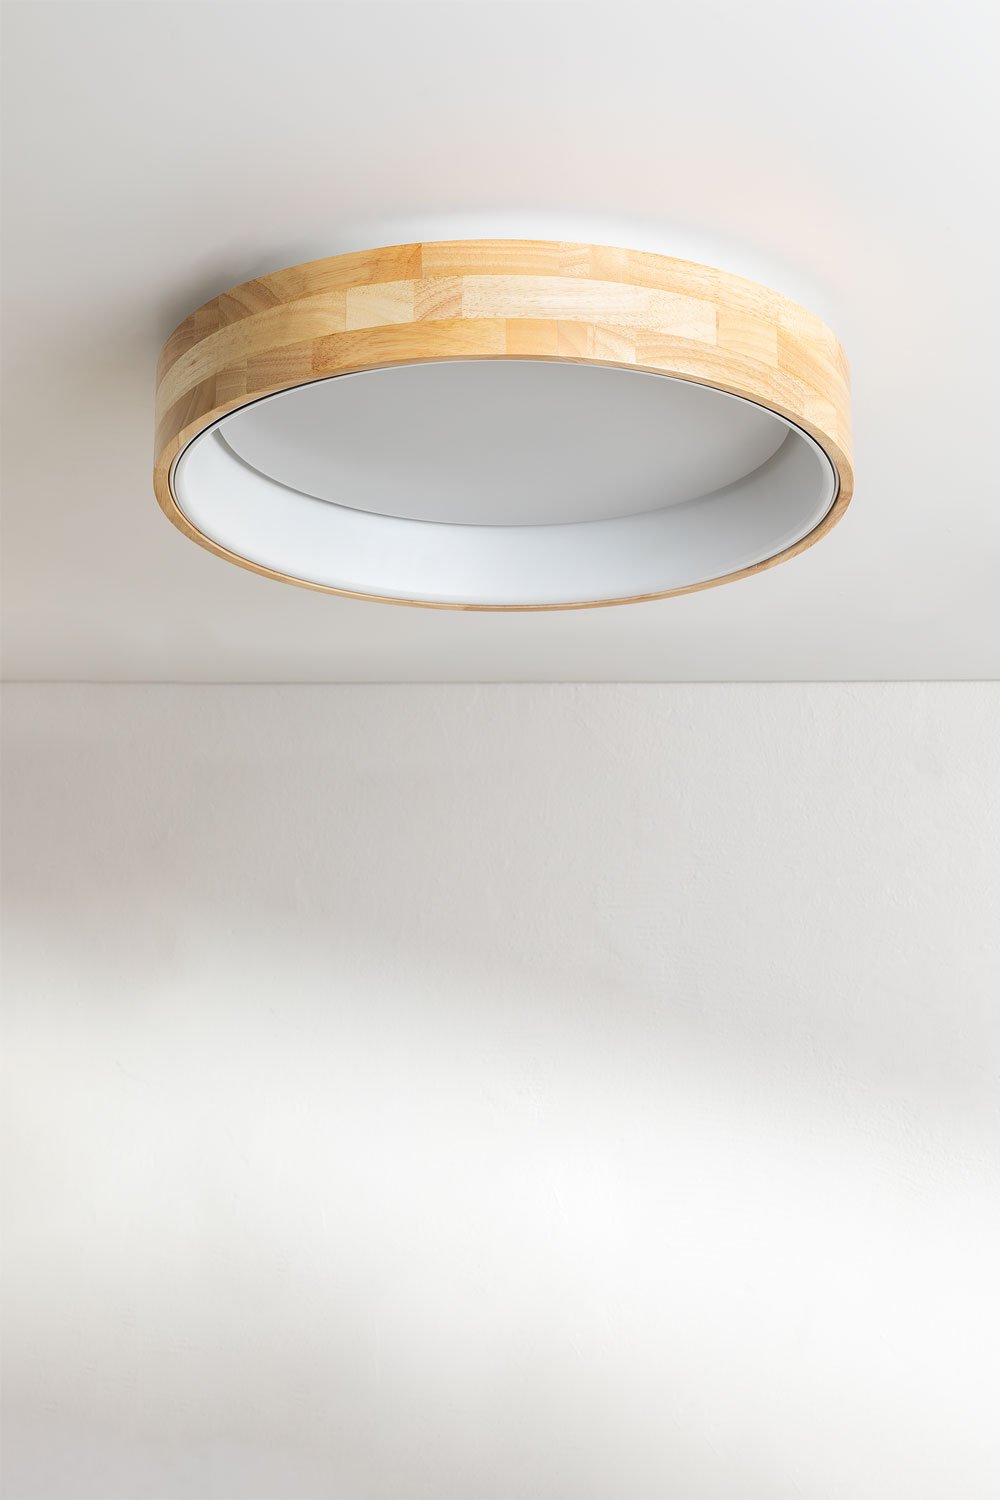 LED plafondlamp in hout en staal Balto, galerij beeld 1